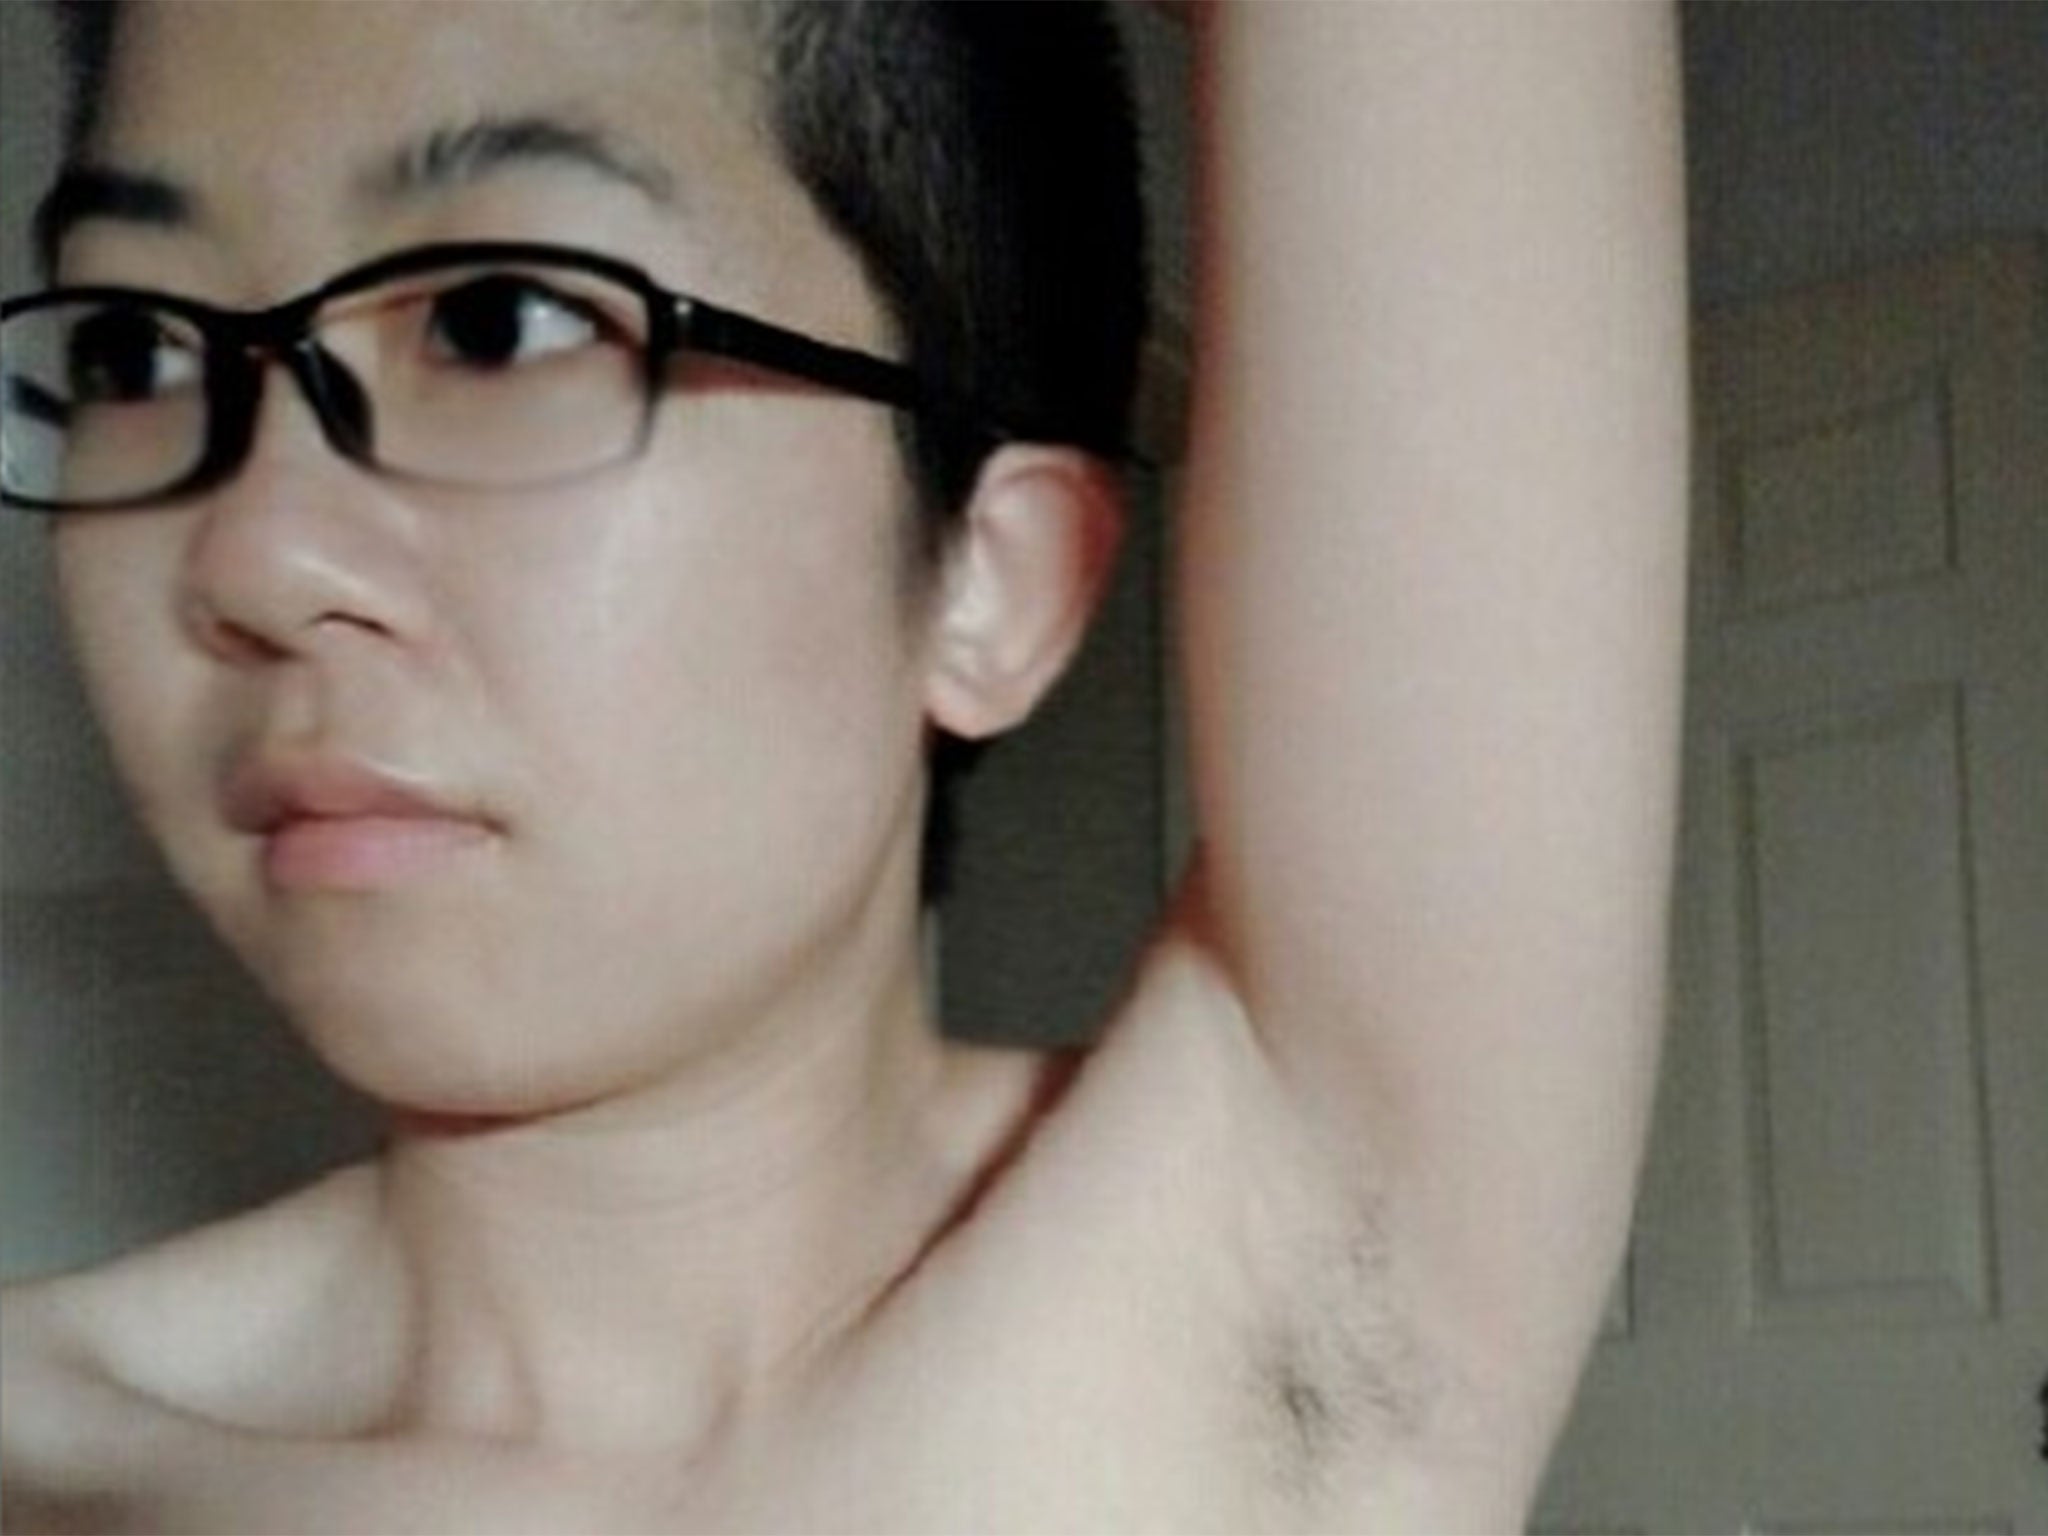 asian hairy armpits - 'hairy armpits asian' Search - XVIDEOS.COM